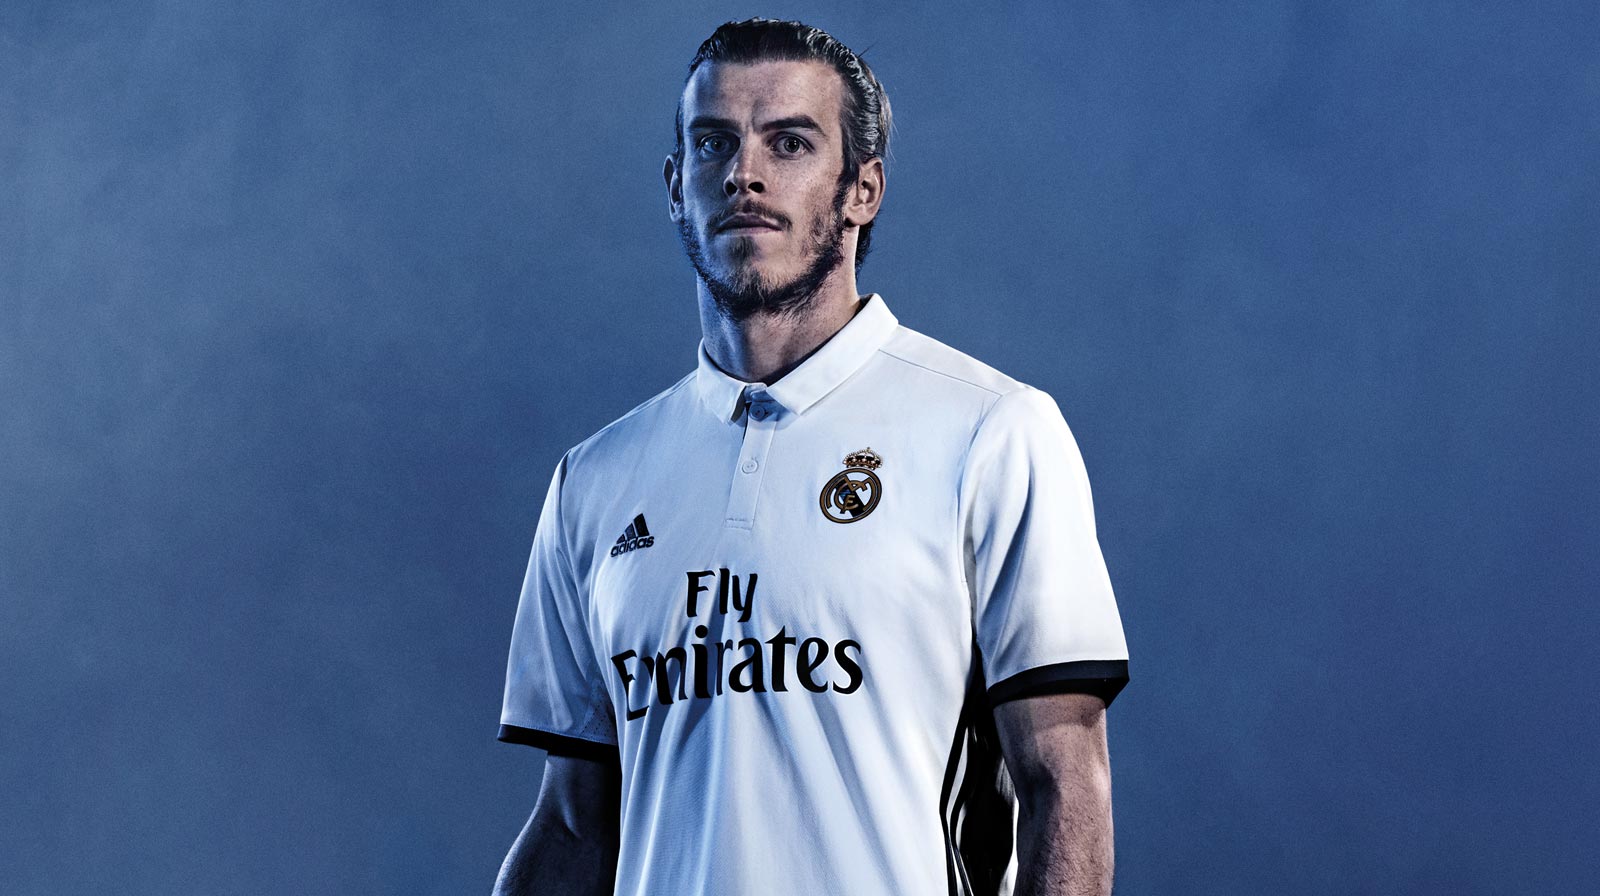 Real Madrid 16 17 Home Kit Released Footy Headlines